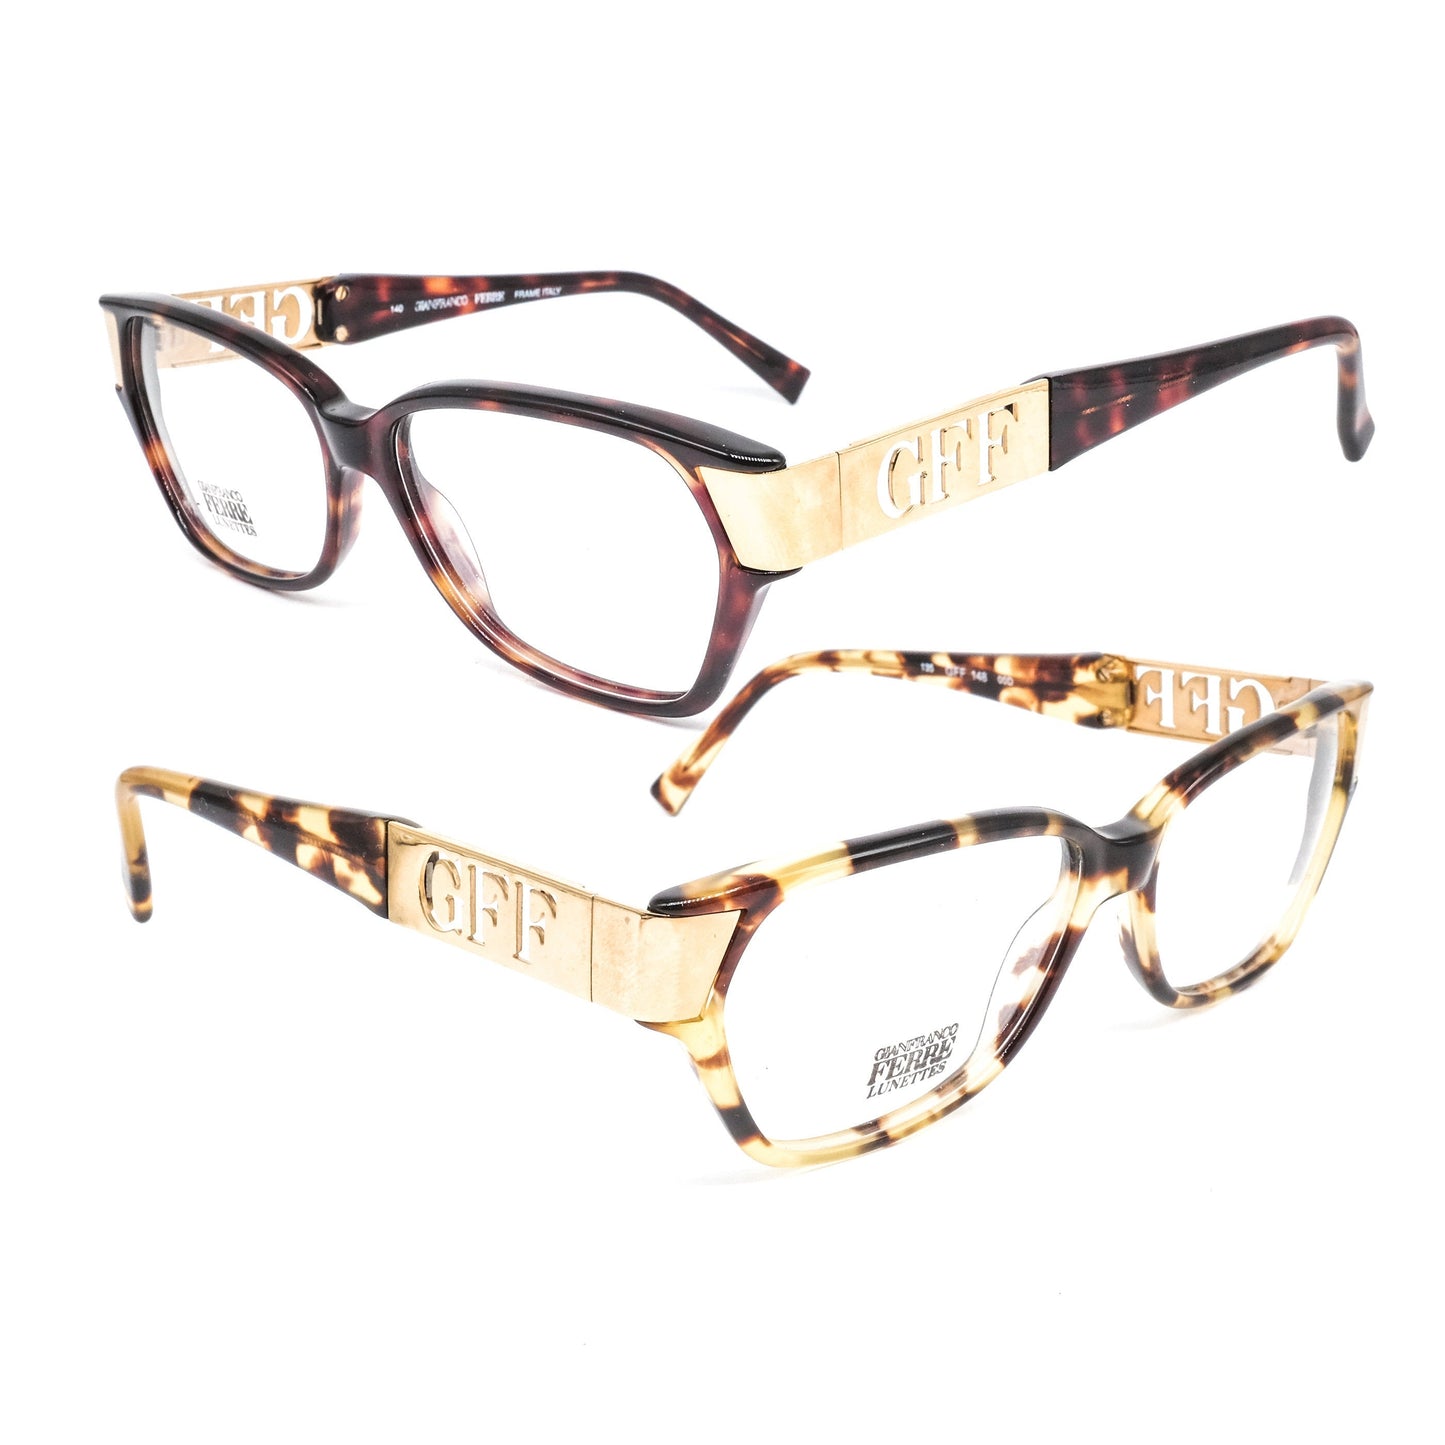 Gianfranco Ferrè square tortoise gold eyeglasses frames made in Italy, 1980s NOS